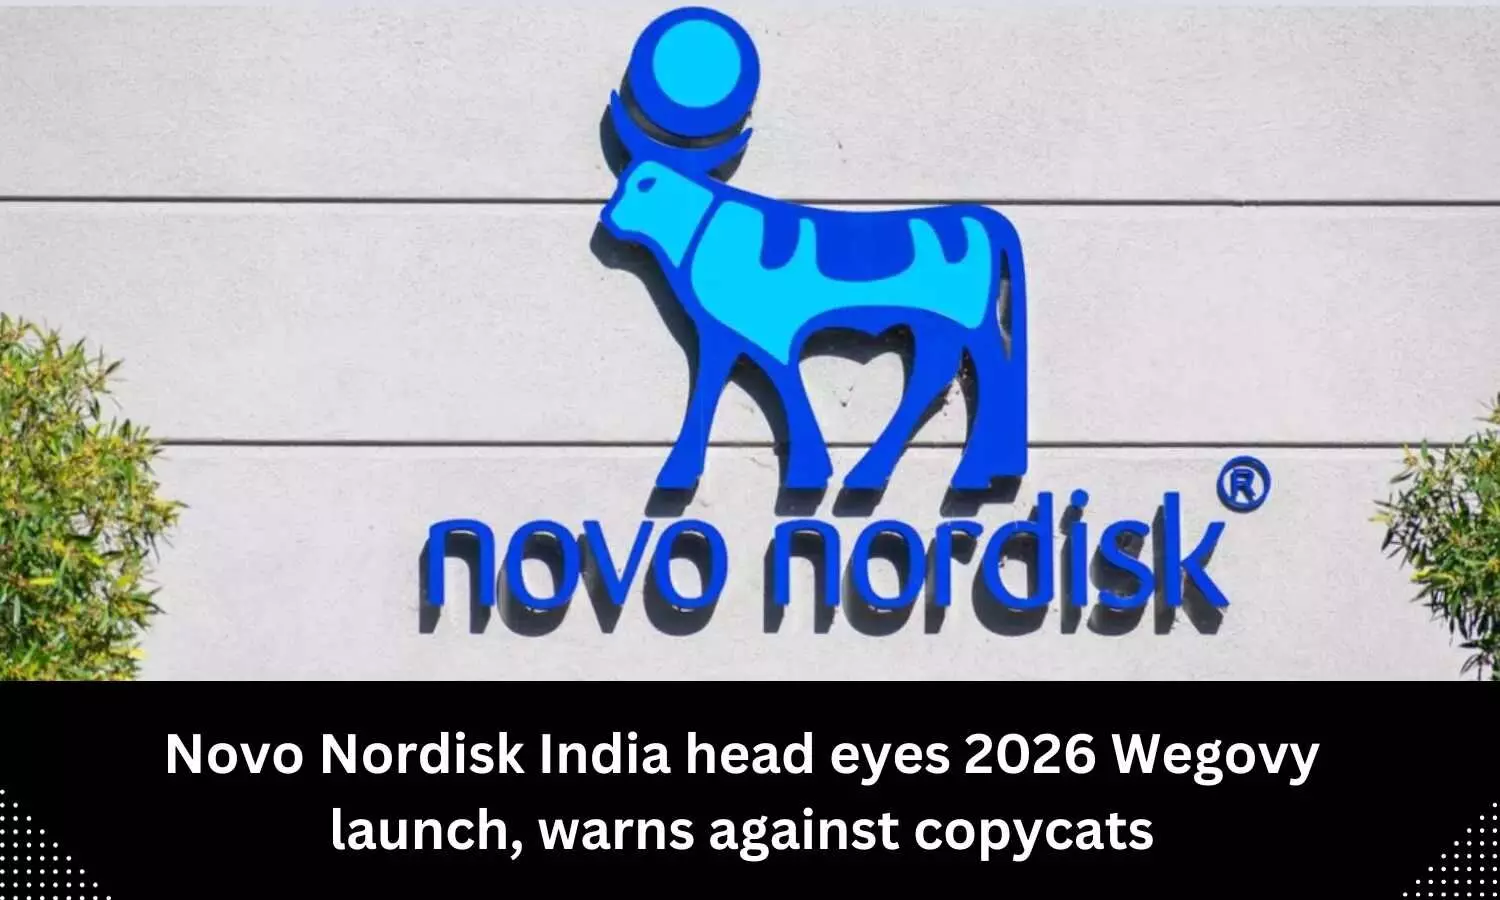 Novo Nordisk India head eyes 2026 weight-loss drug Wegovy launch